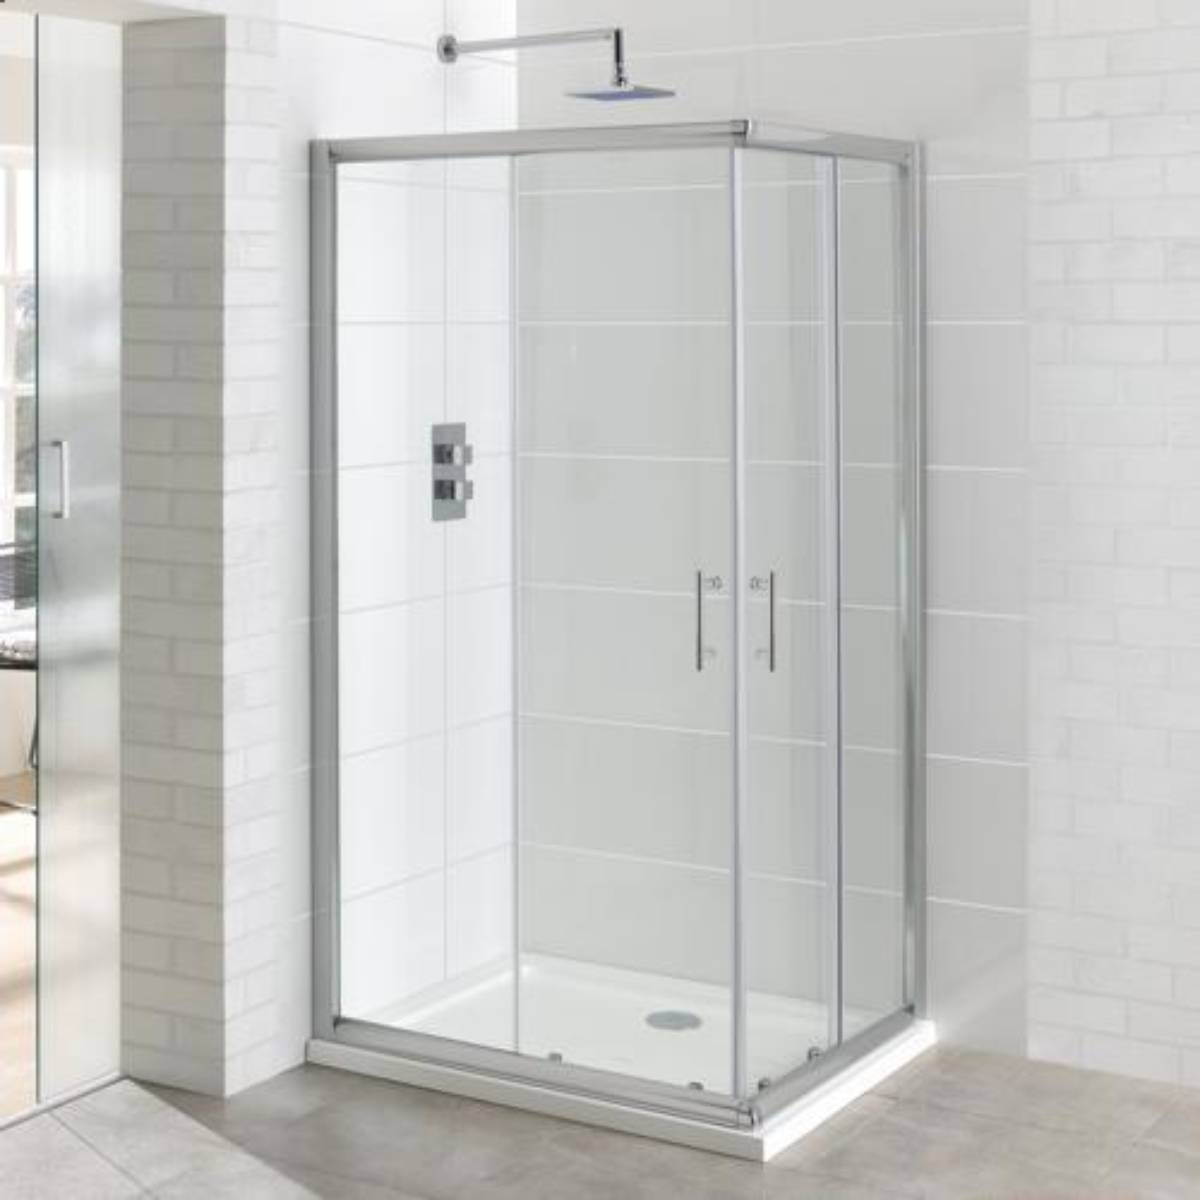 Vantage 900 x 900mm Corner Entry Shower Enclosure (3027)